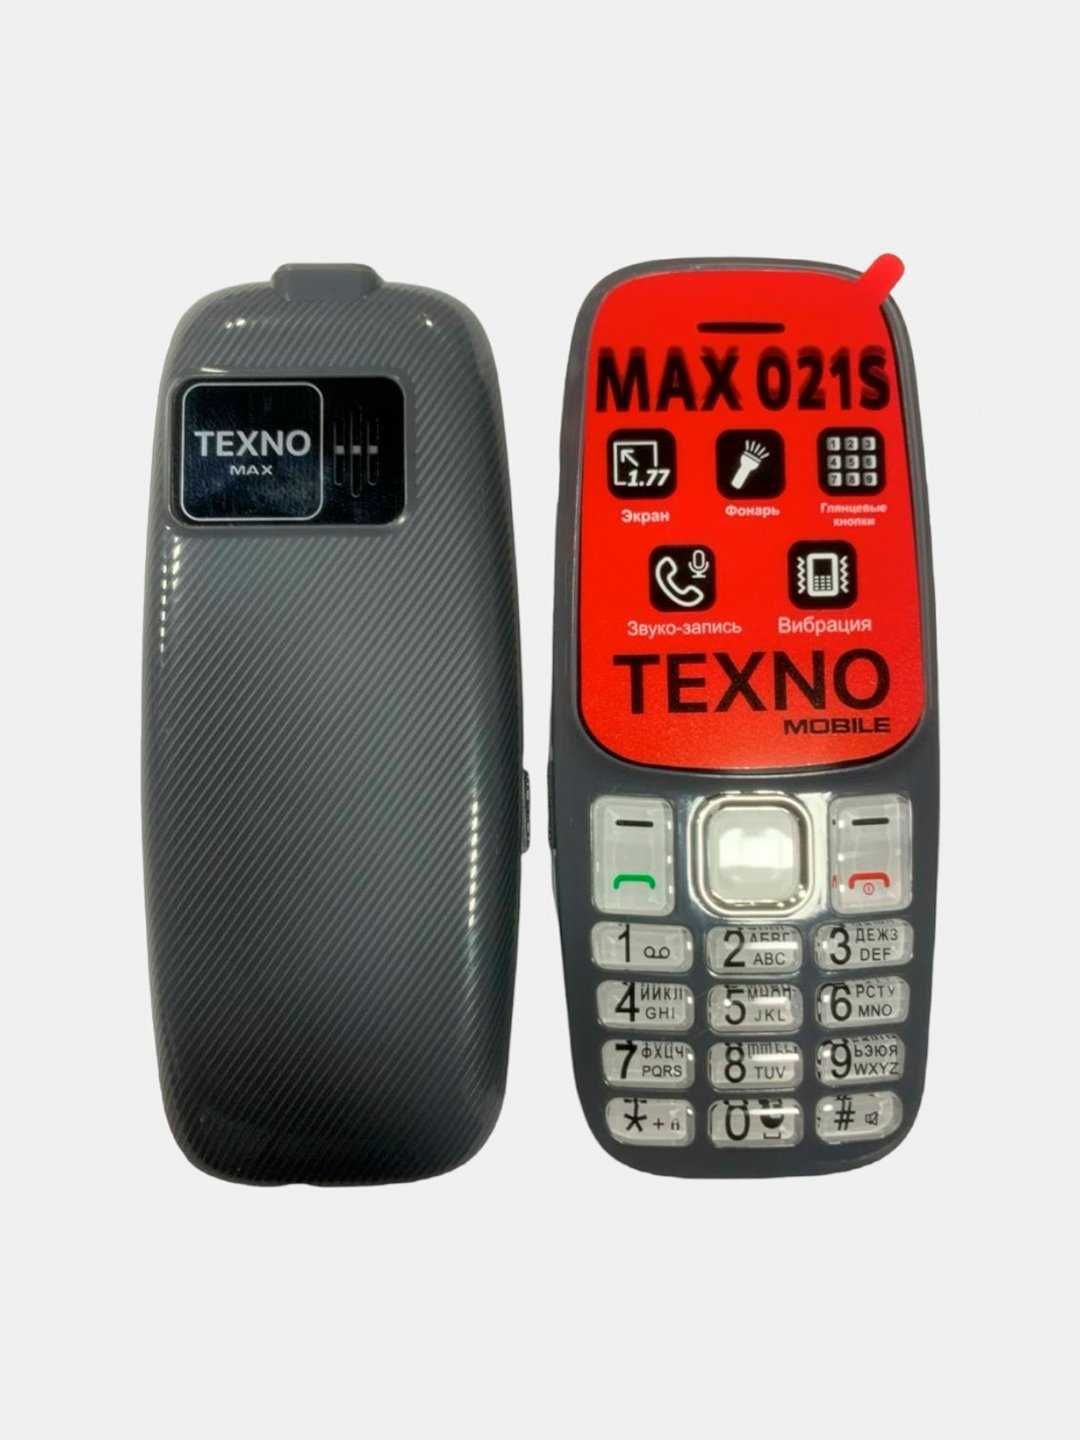 Texno Max 021S  (Новый+Гарантия+Скидка) Nokia Knopka New-2024!